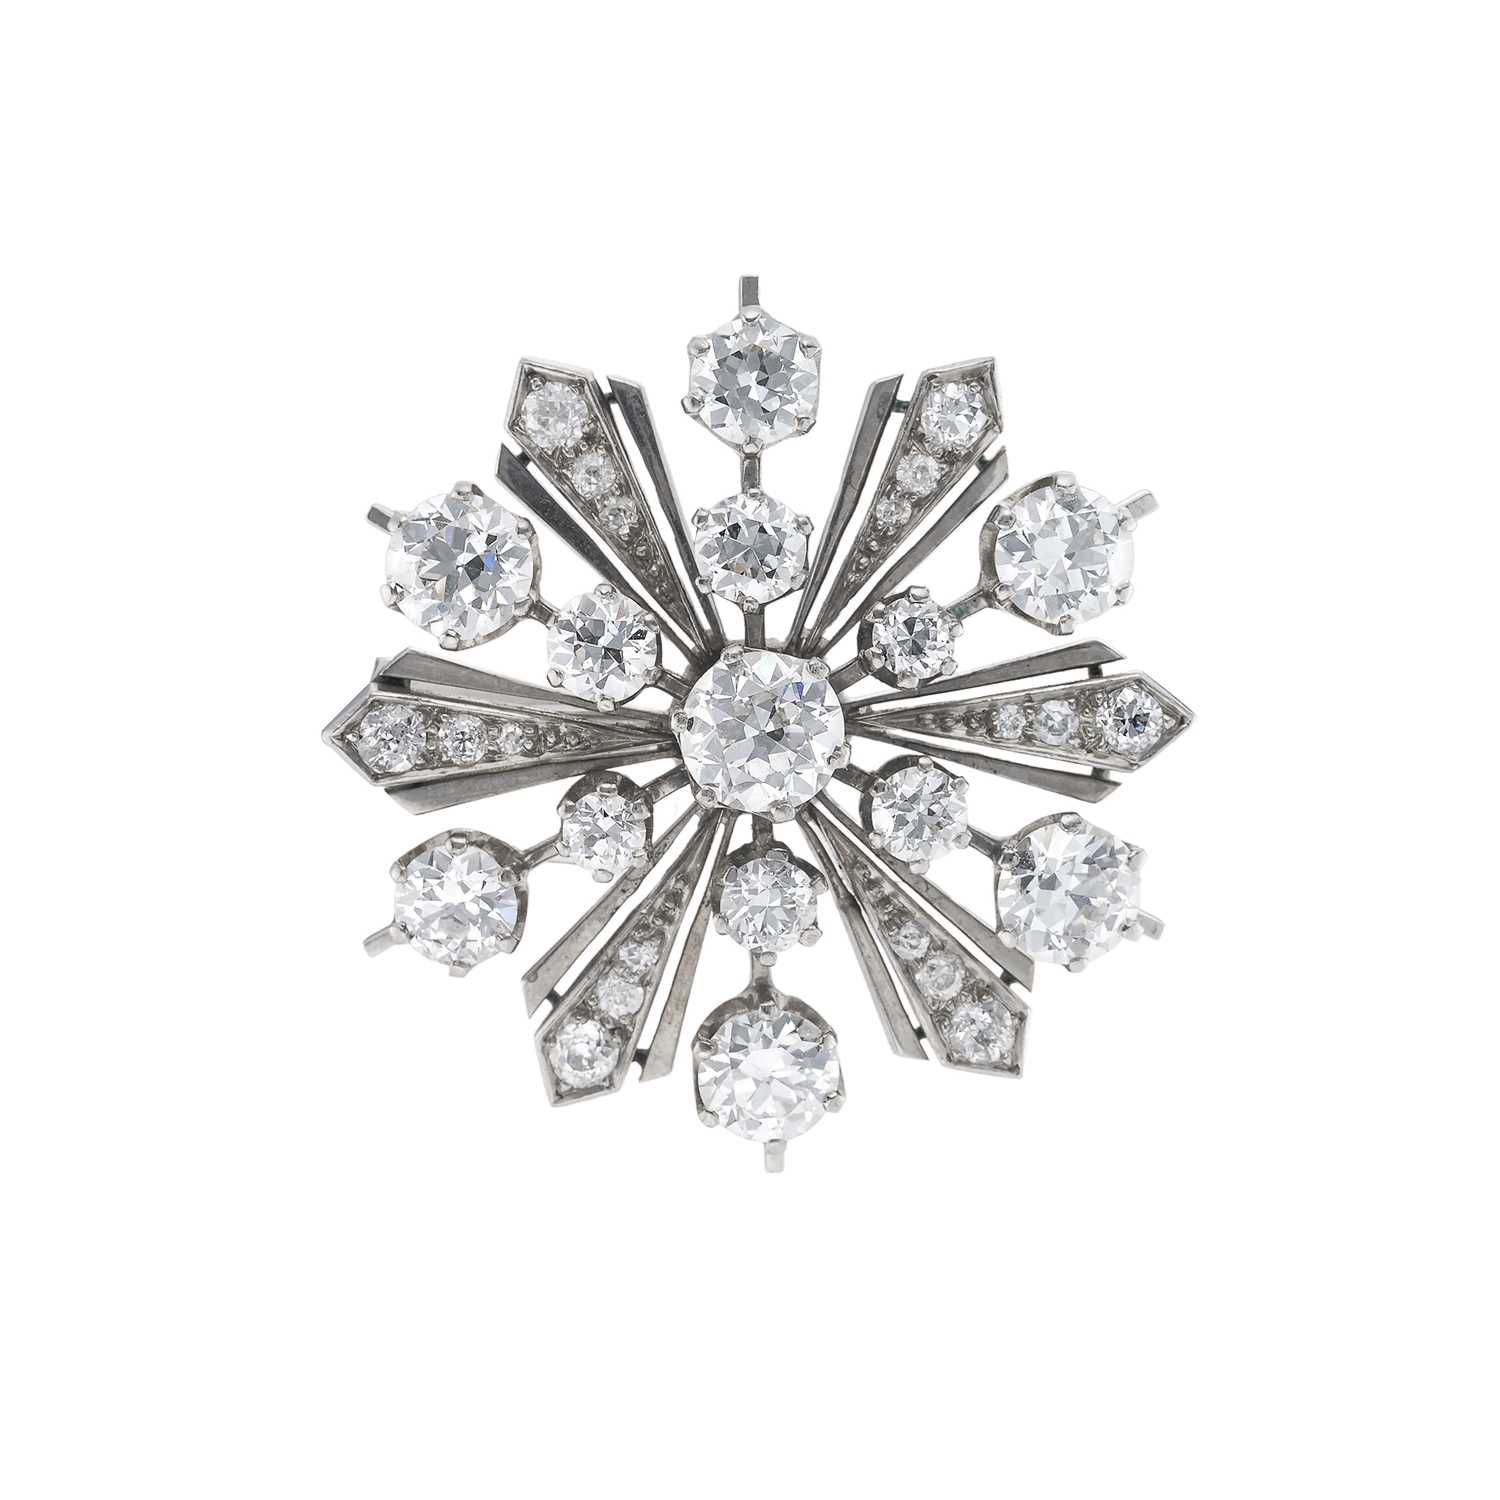 77 - A mid 20th century diamond snowflake brooch